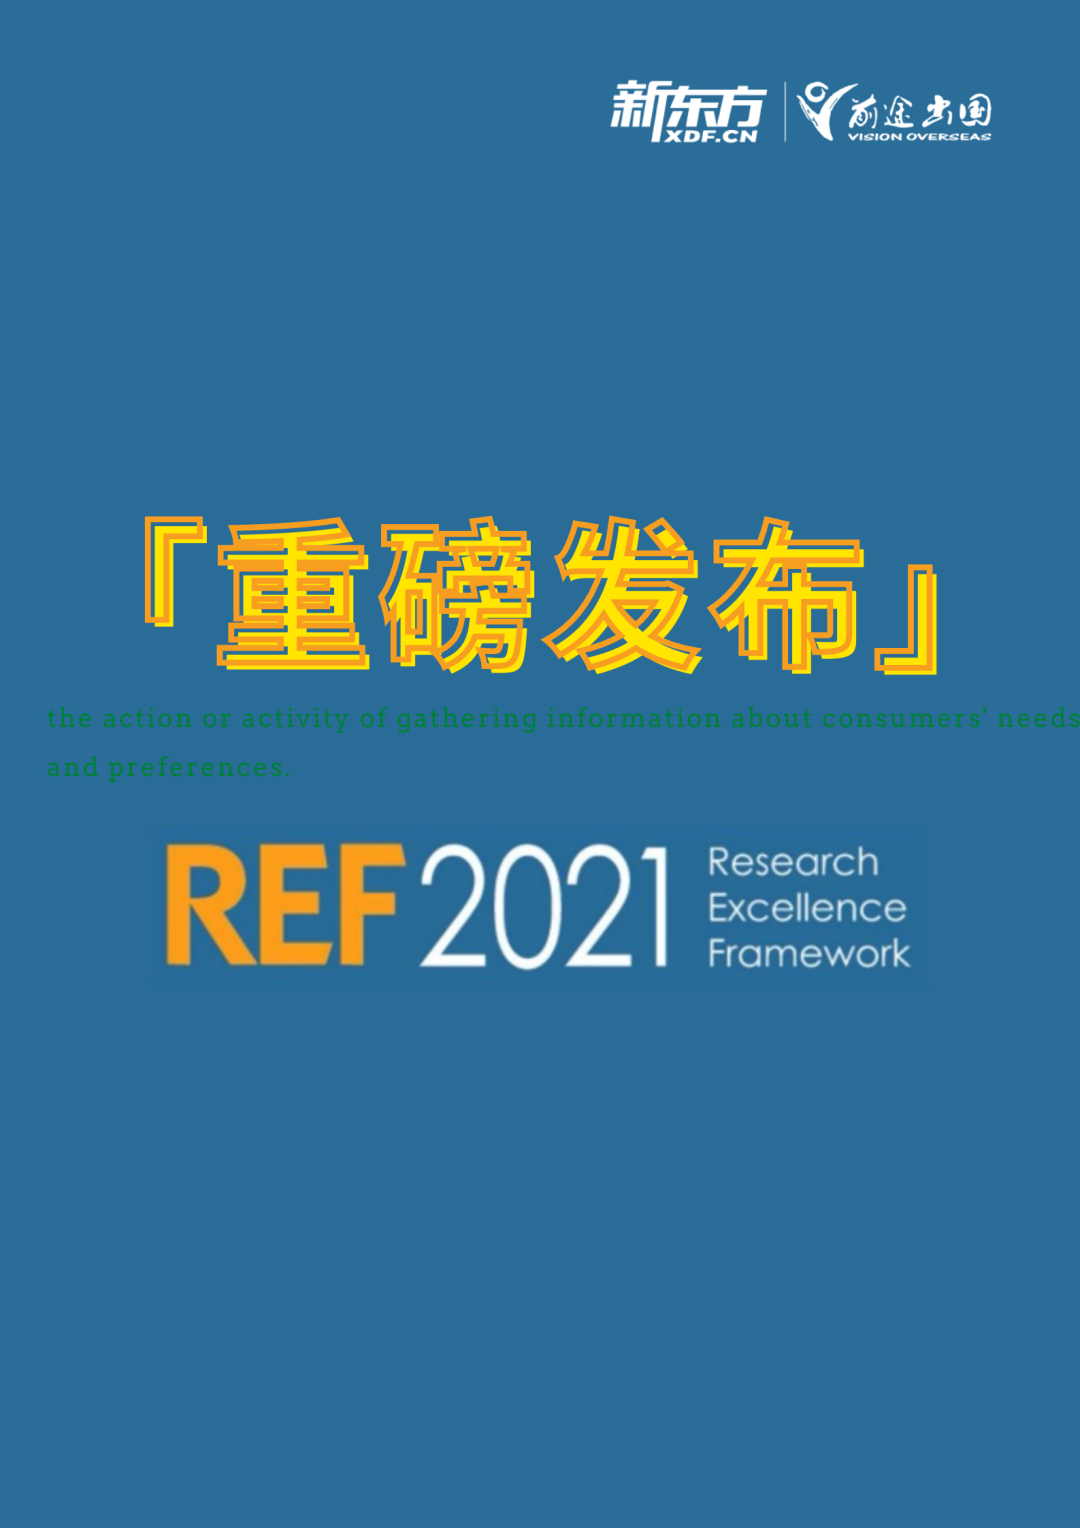 REF(英国高校学术研究排名)2021榜单：帝国理工名列榜首